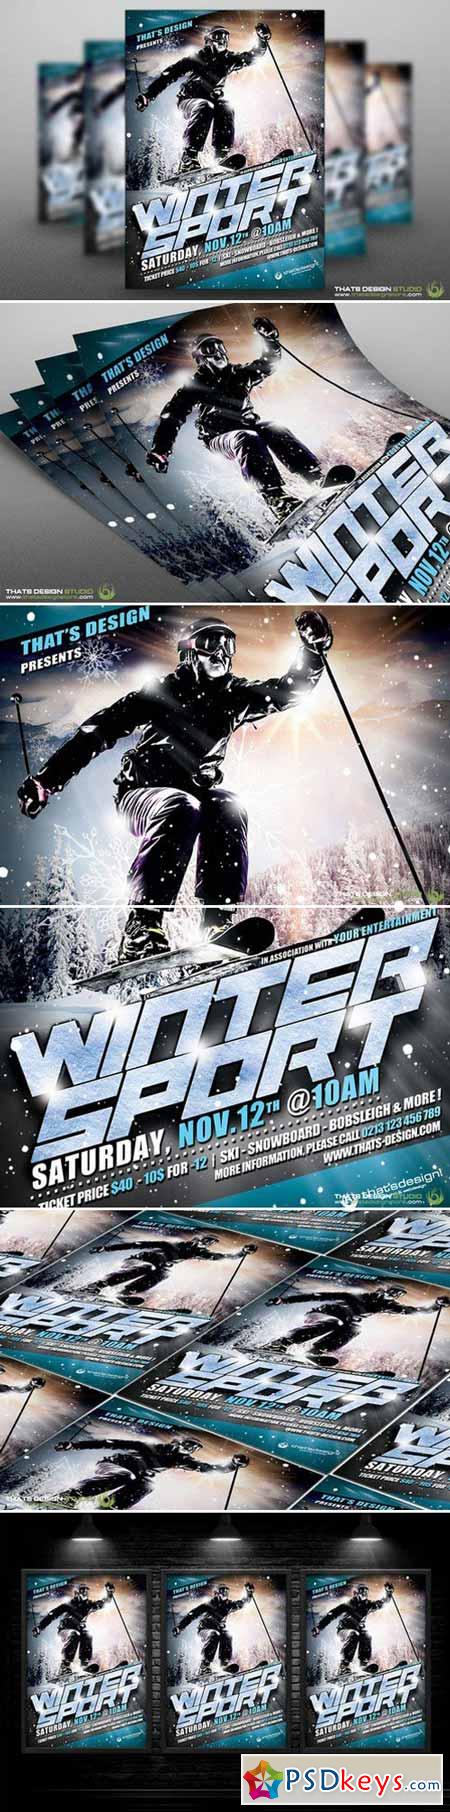 Winter Sports Flyer Template V1 91940